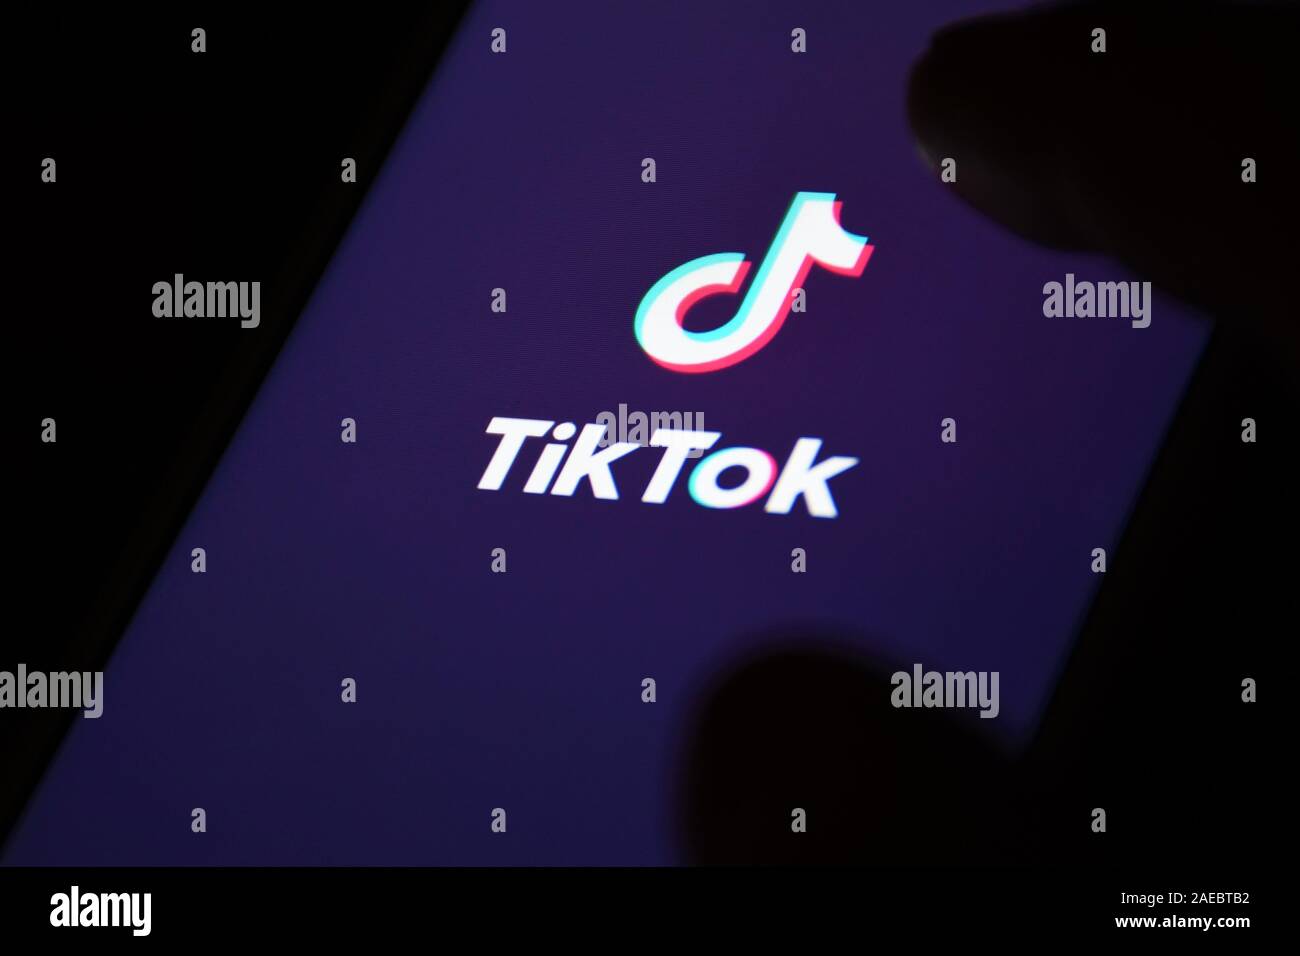 ultra custom night download on pc｜TikTok Search